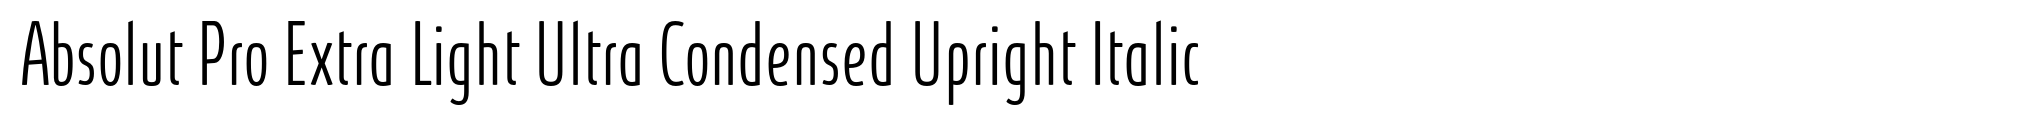 Absolut Pro Extra Light Ultra Condensed Upright Italic image